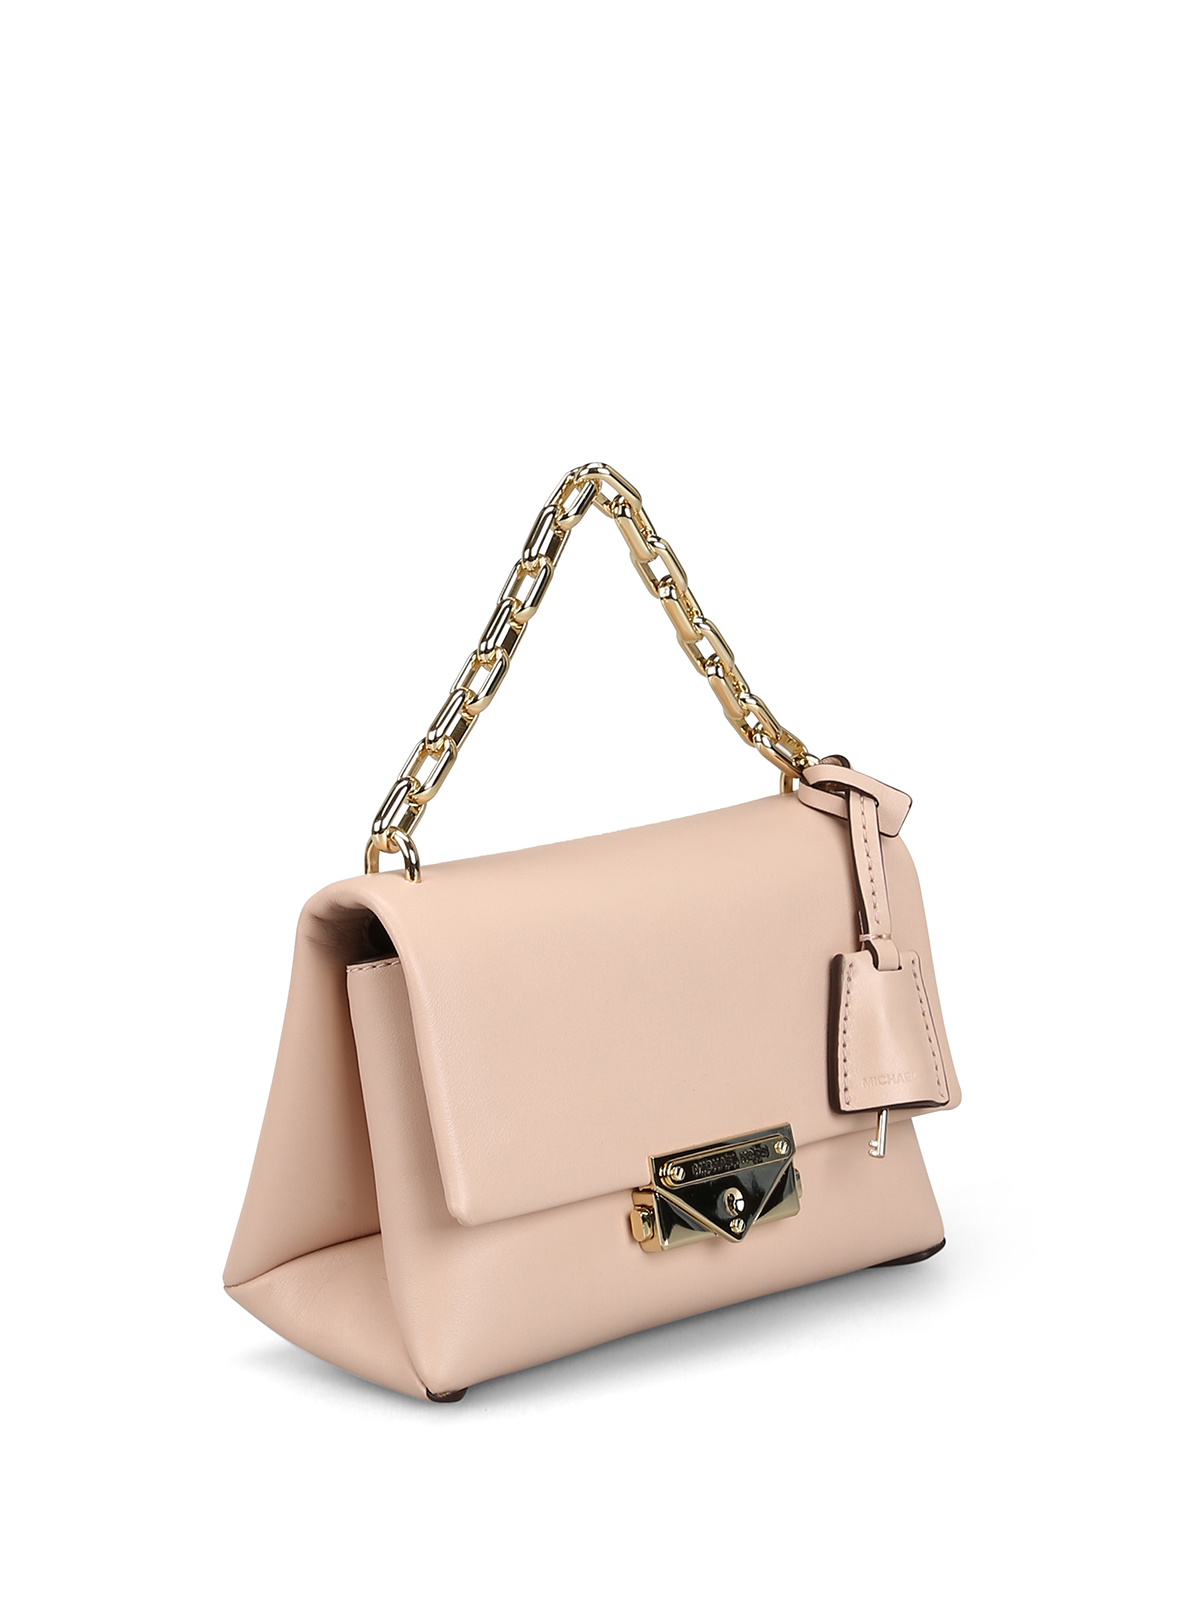 Michael Kors - Cece XS light pink smooth leather bag - shoulder bags - 32S9L0EC0L187